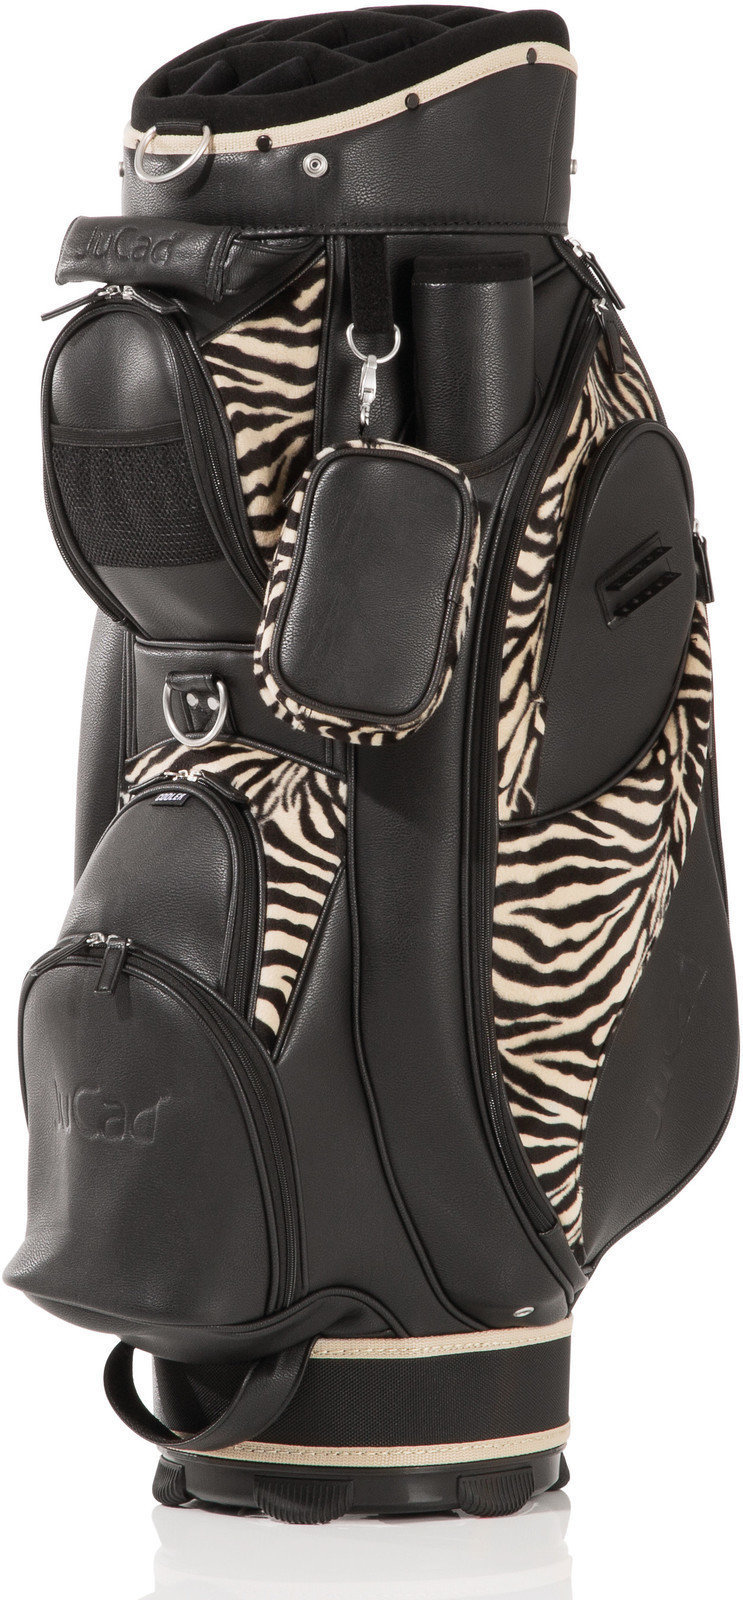 Cart Bag Jucad Style Black/Zebra Cart Bag